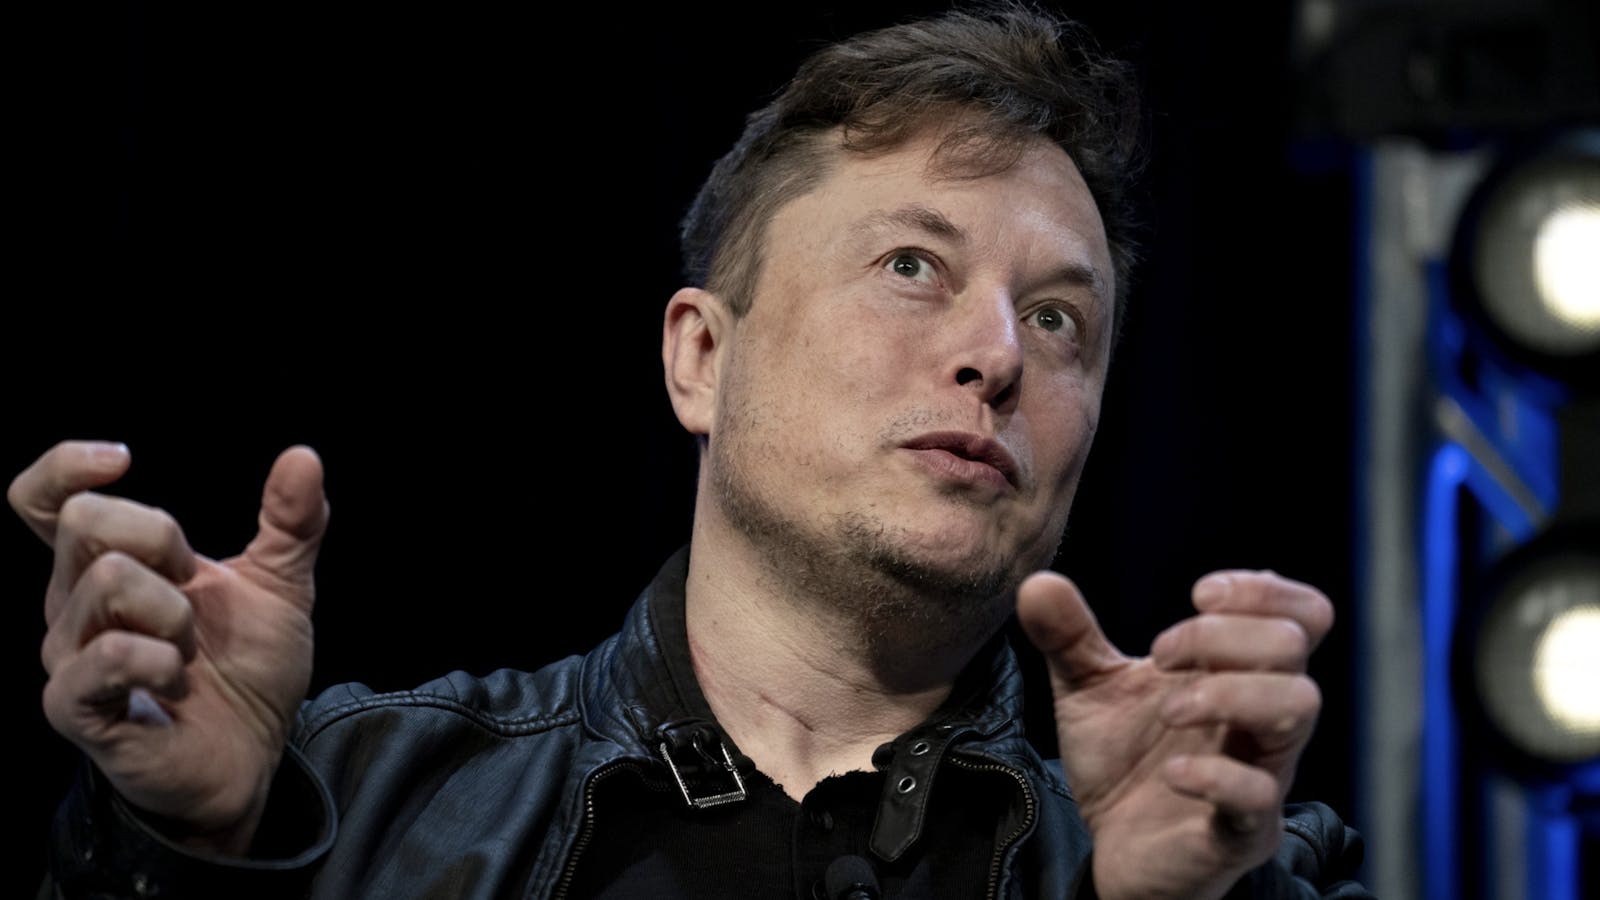 Tesla CEO Elon Musk. Photo by Bloomberg